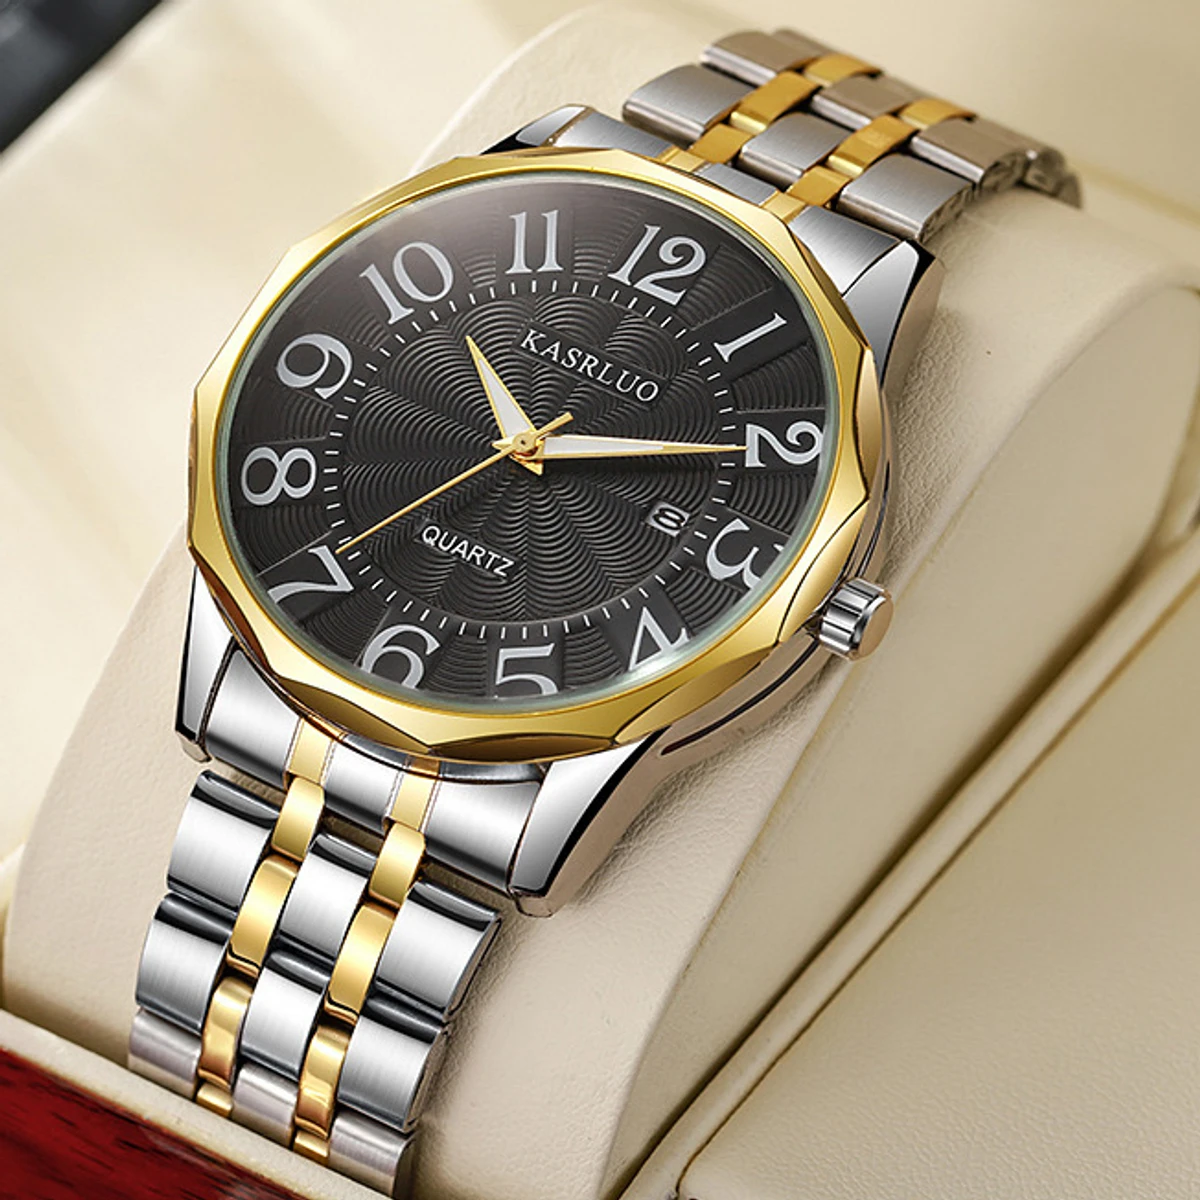 KASRLUO Popular New Fashion Quartz Watch for Men Stainless Steel Waterproof Luminous Date Mens Watches Top Brand Luxury Clock- Golden & Black